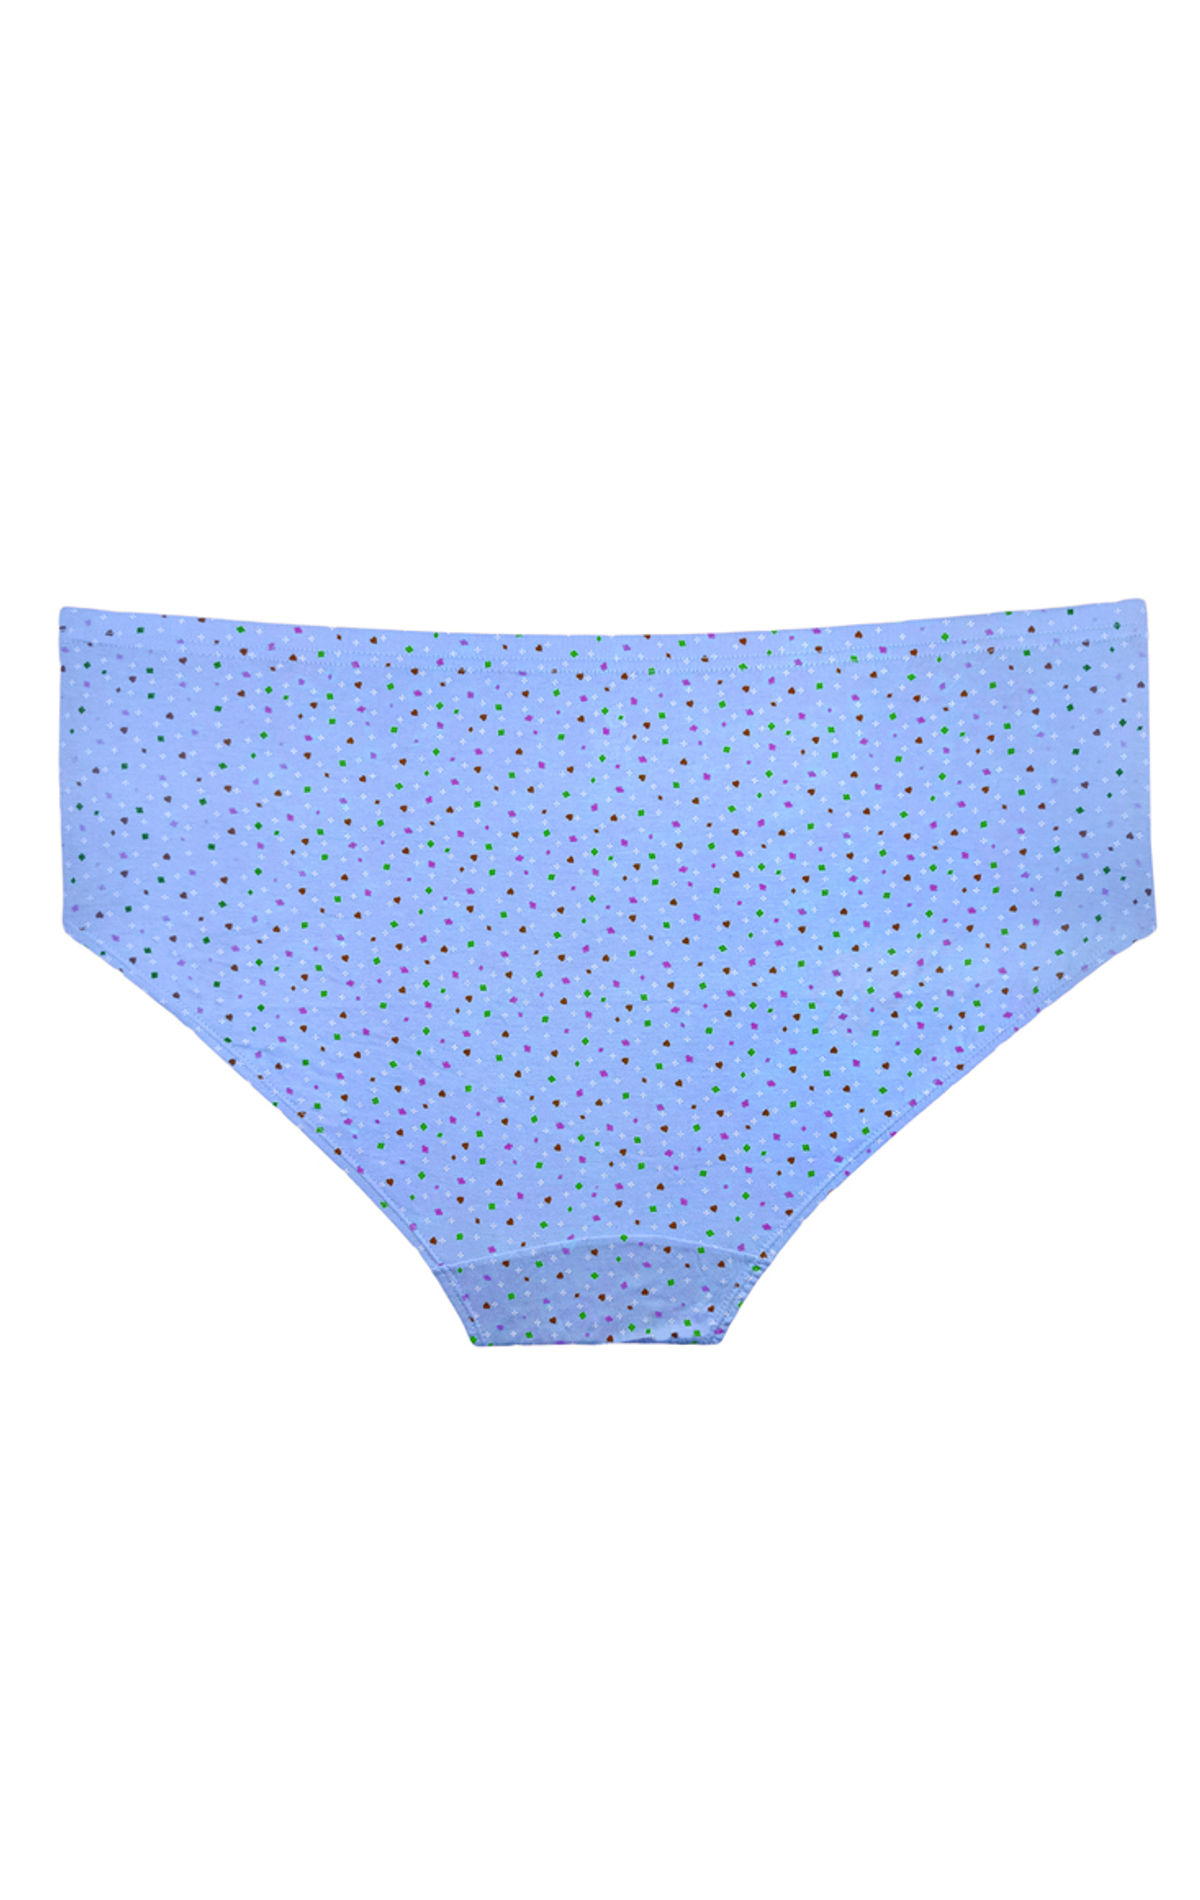 Girls Polkadot Tagless Briefs Underwear Super Soft Panties 3-Pack